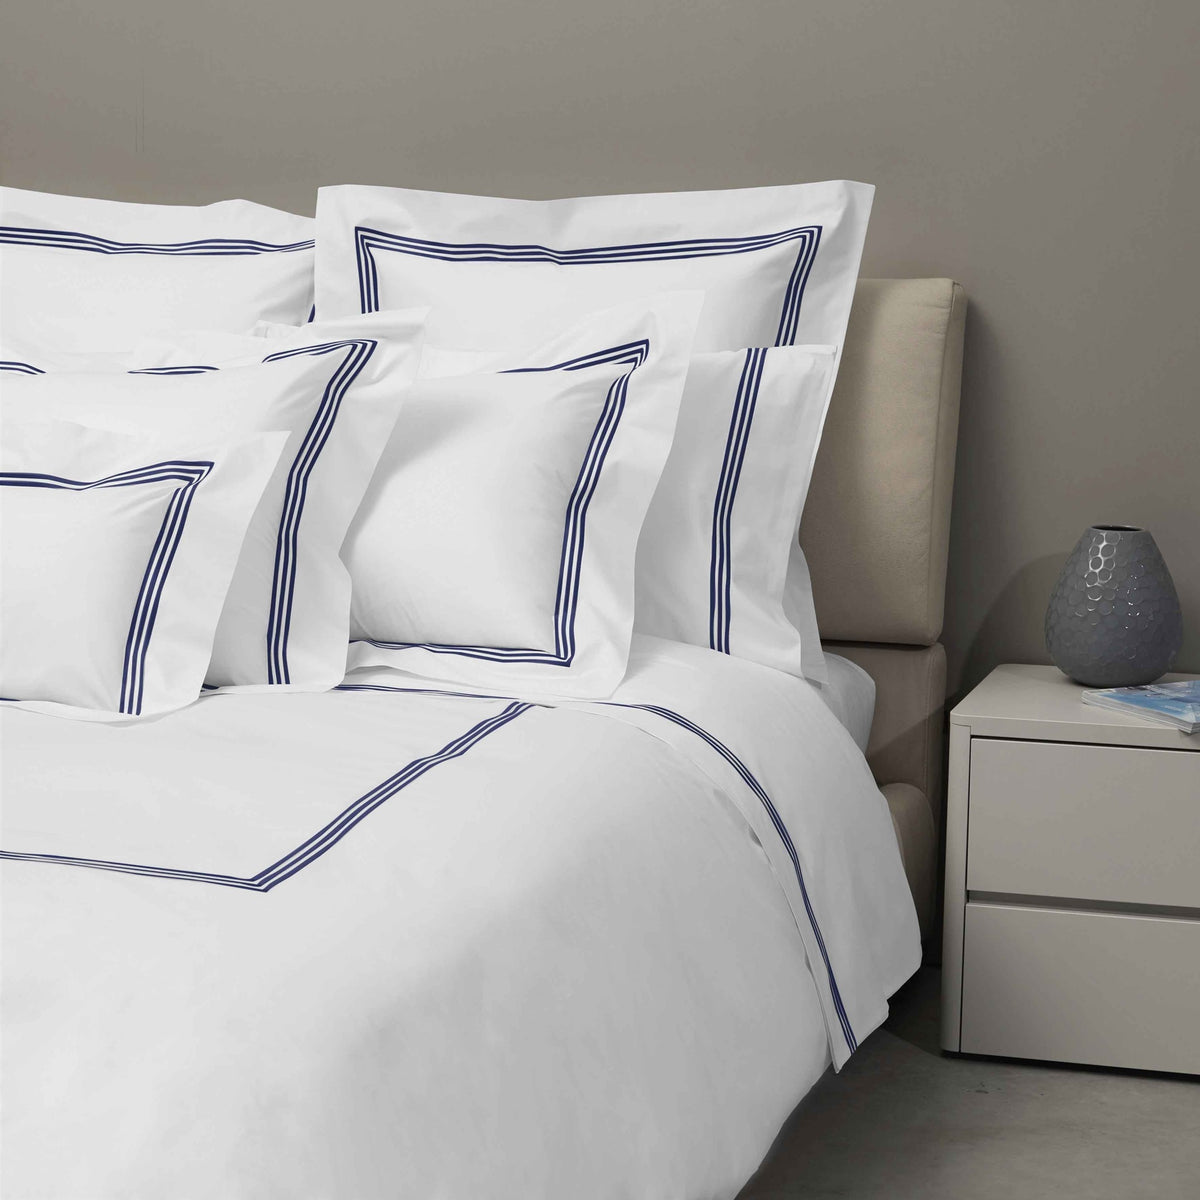 Bed Dressed in Signoria Platinum Percale Bedding in White/Midnight Blue Color